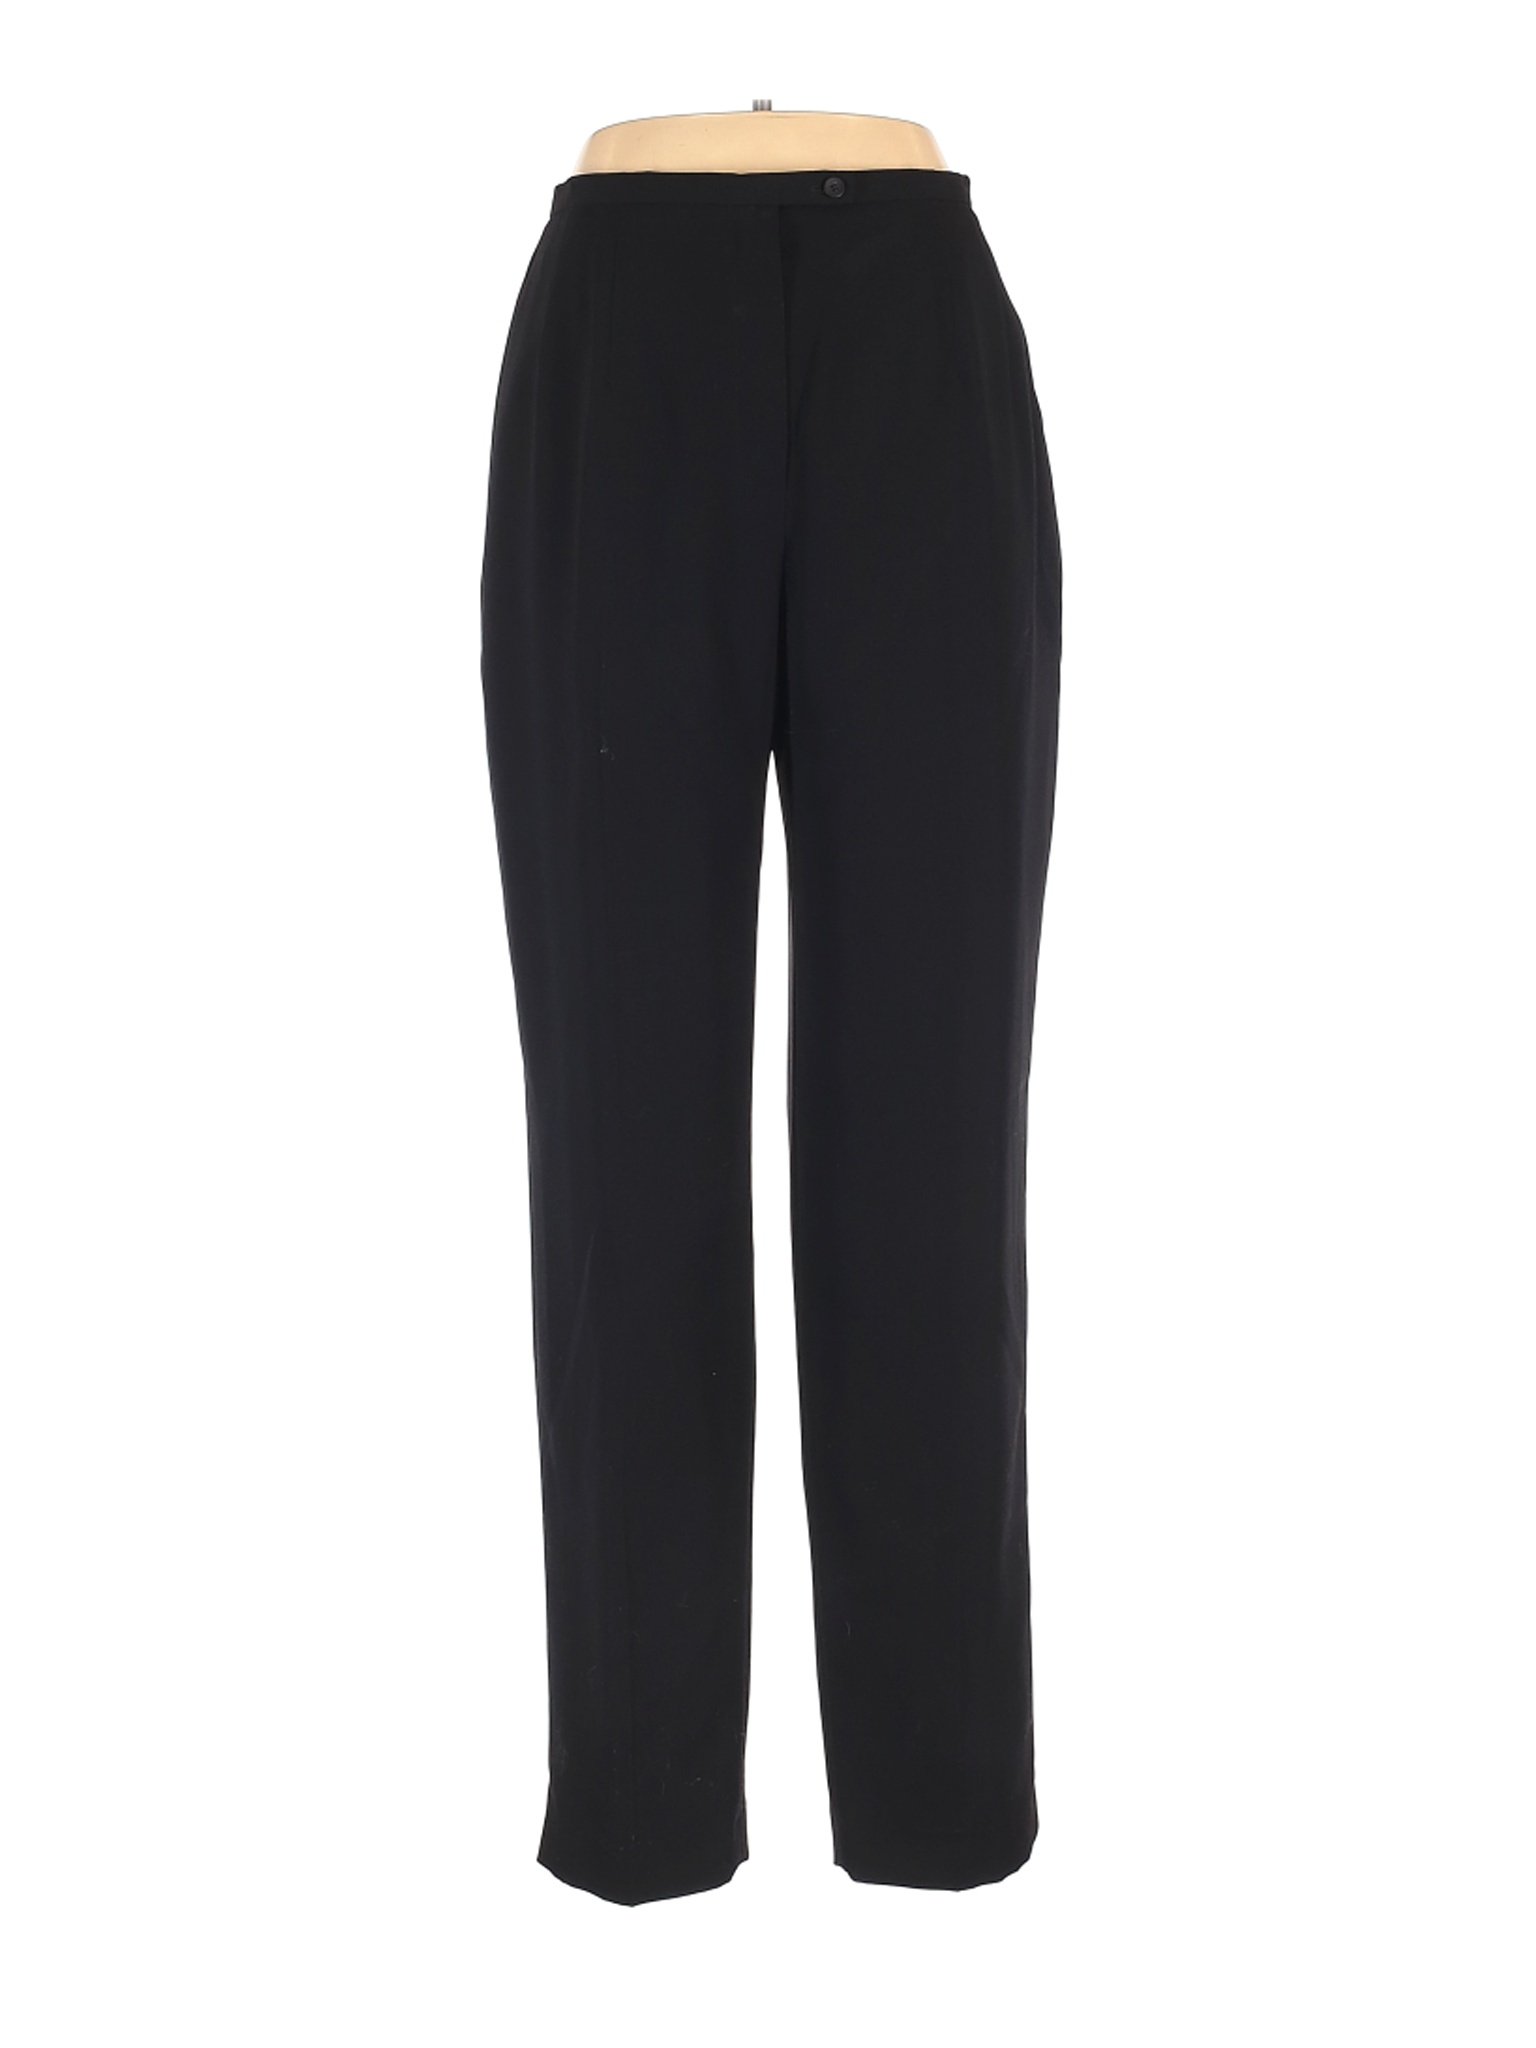 NWT Harve Benard by Benard Holtzman Women Black Dress Pants 12 | eBay